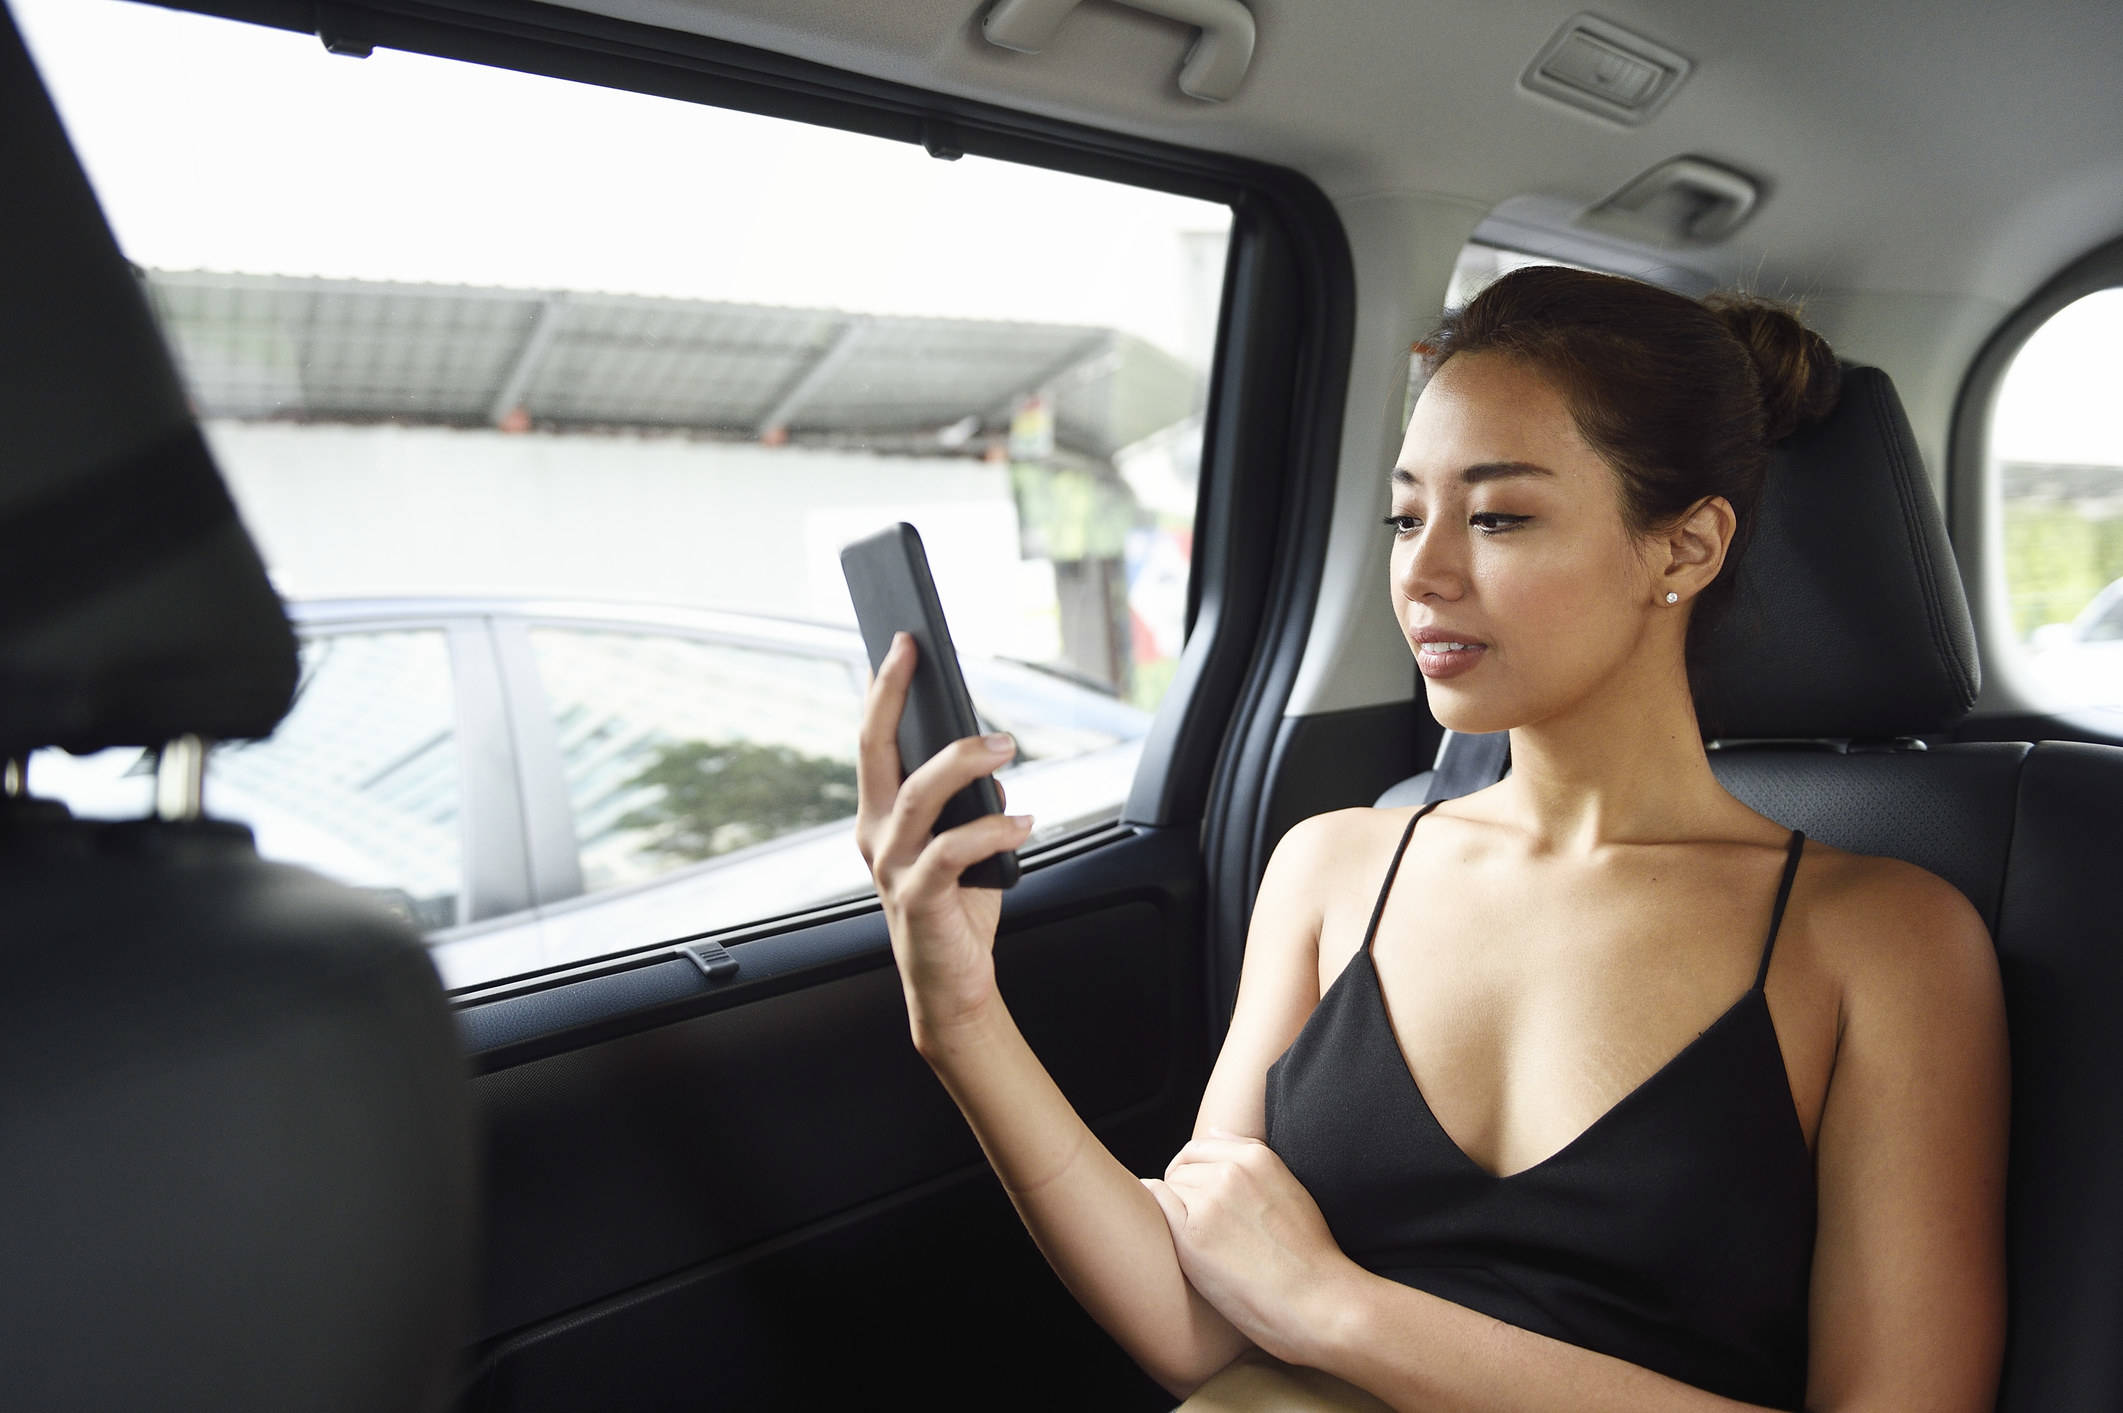 A woman checks her phone while riding in a car